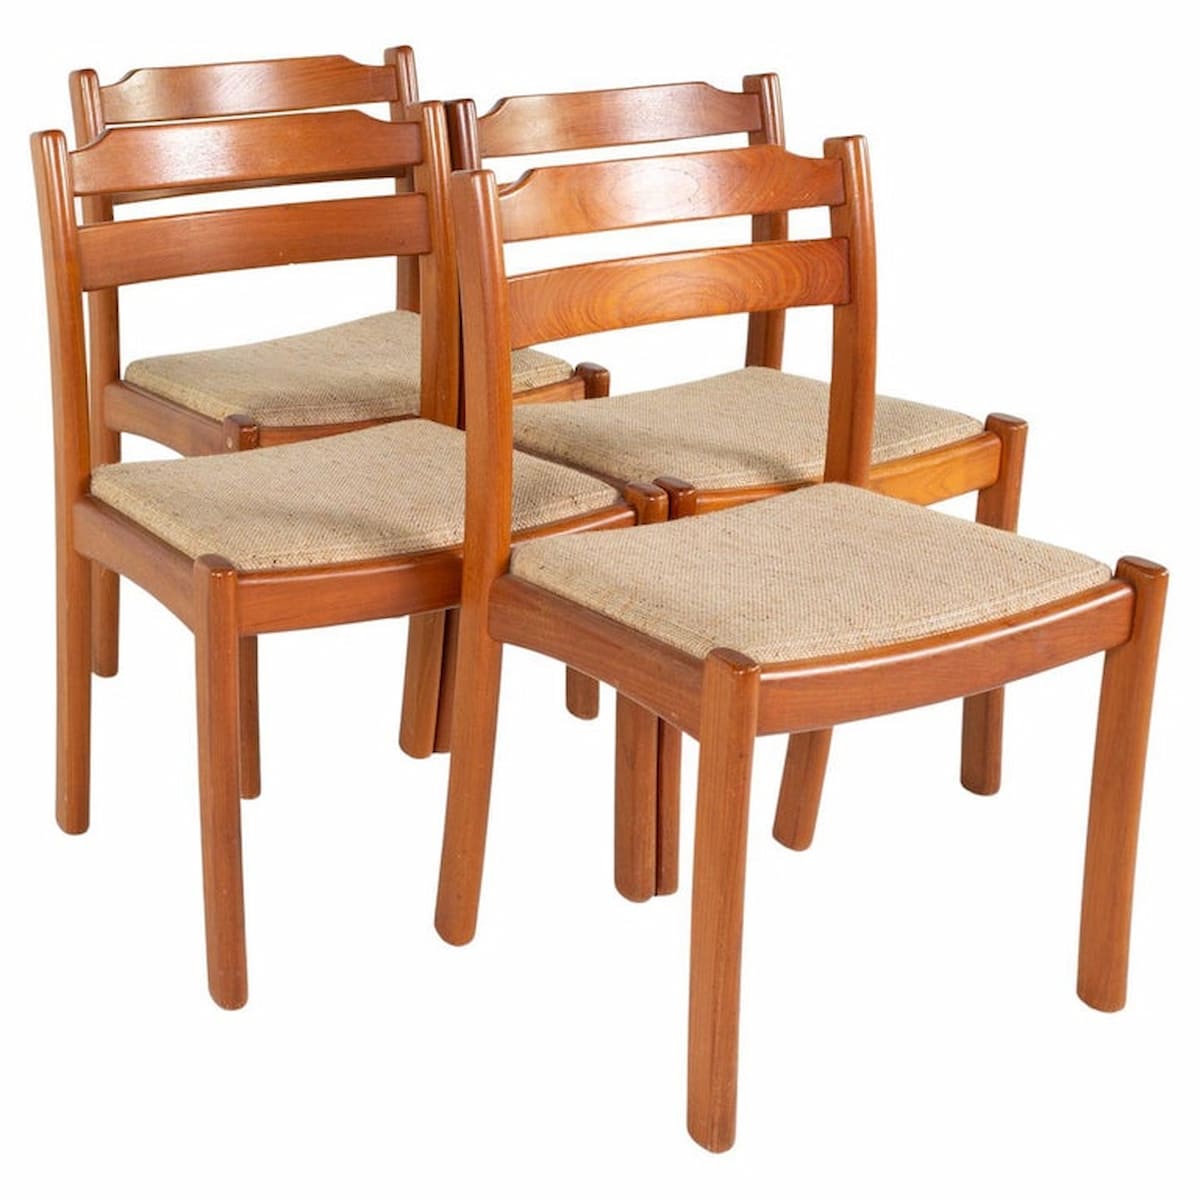 Bruksbo Style Mid Century Teak Dining Chairs - Set of 4